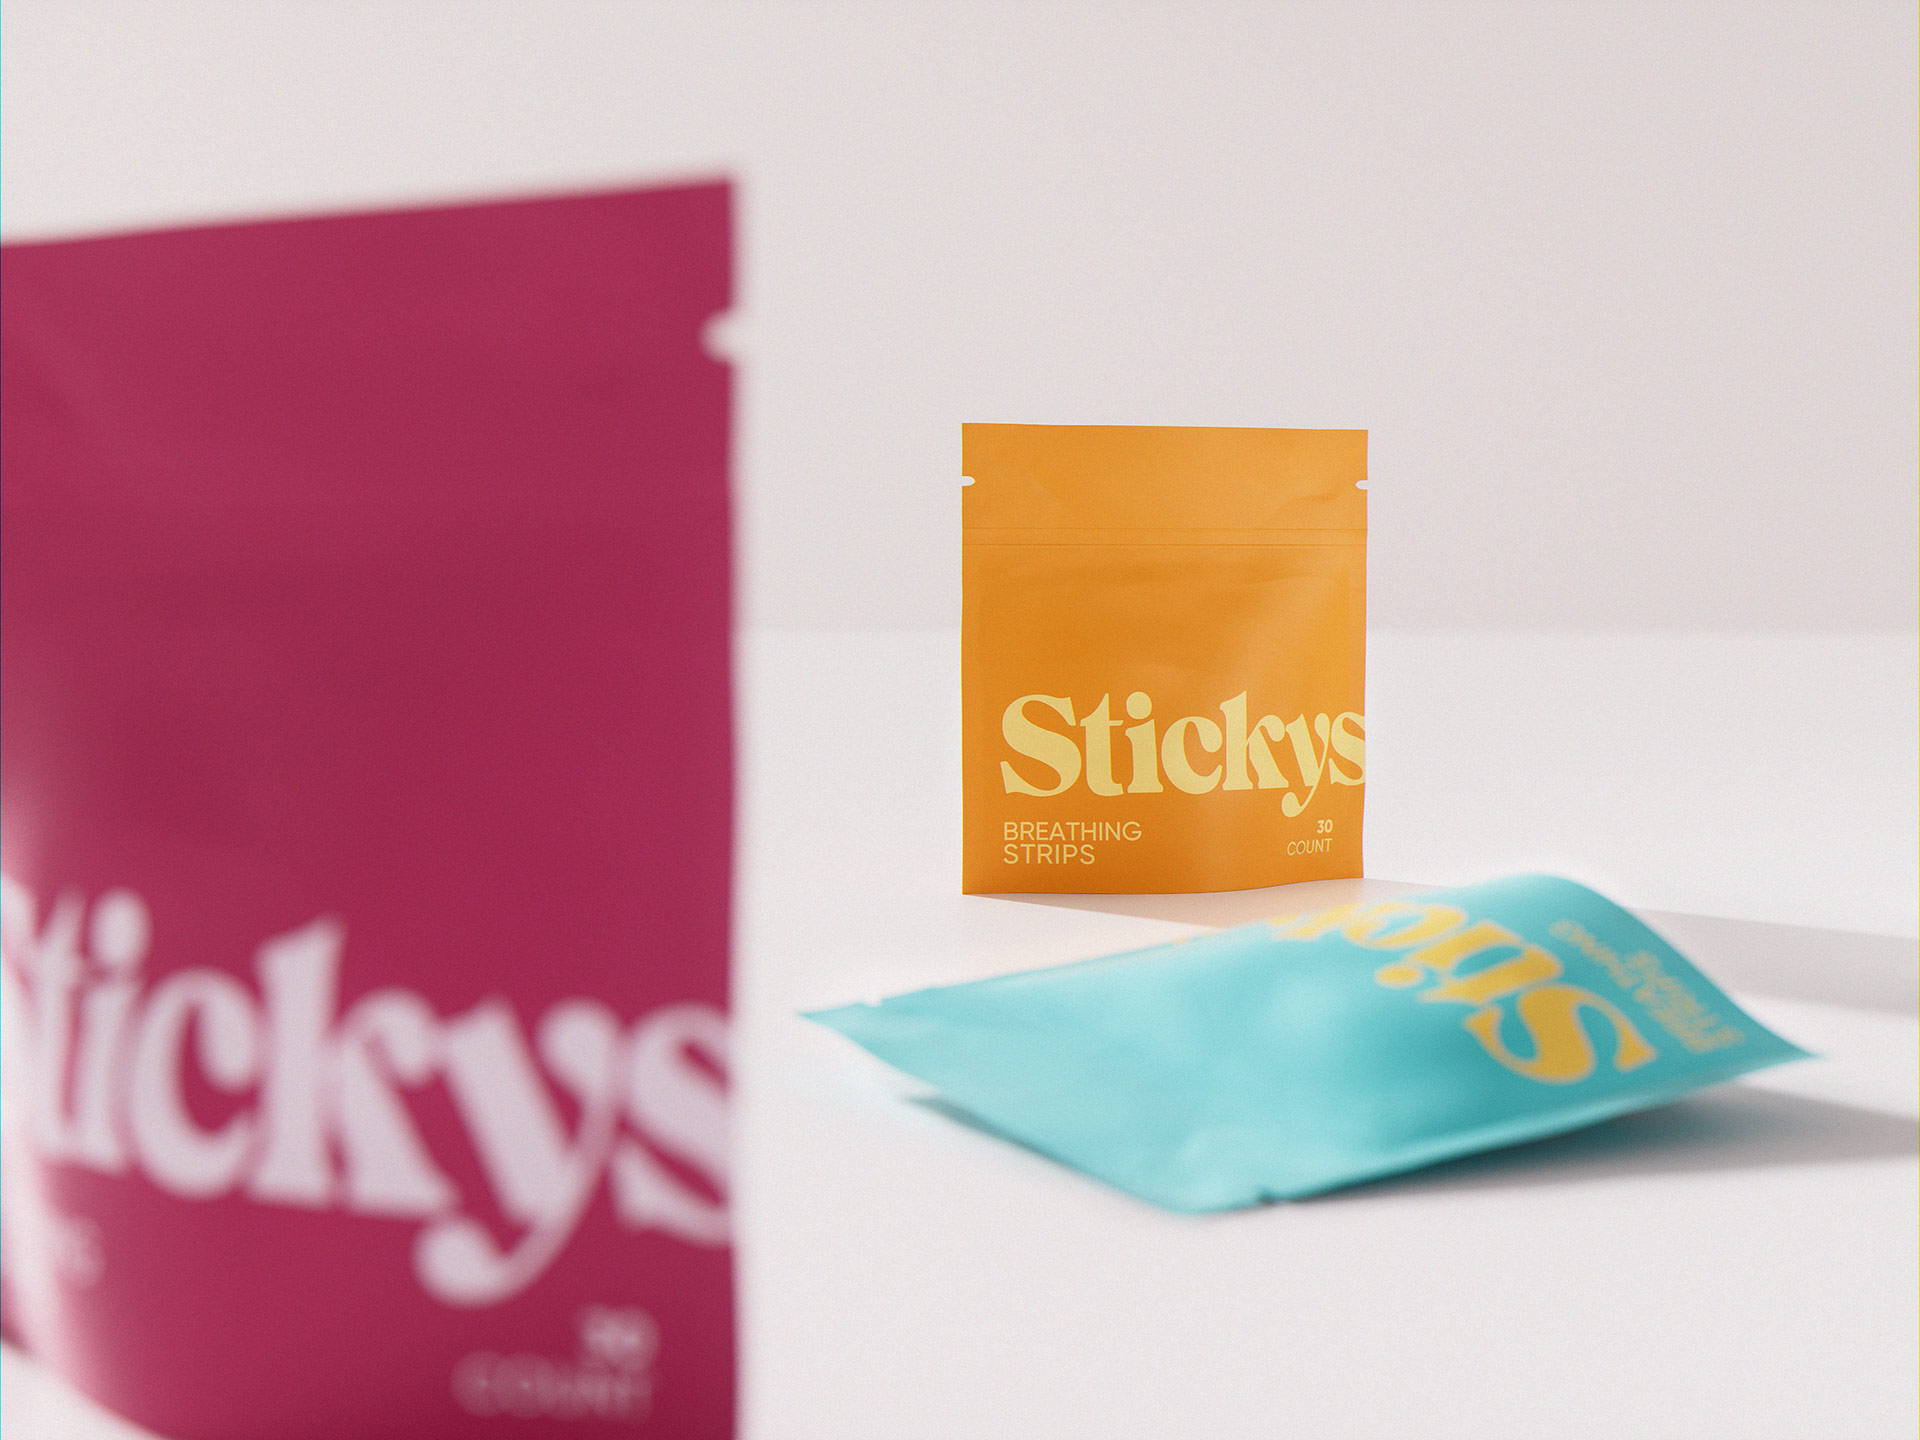 Stickys image